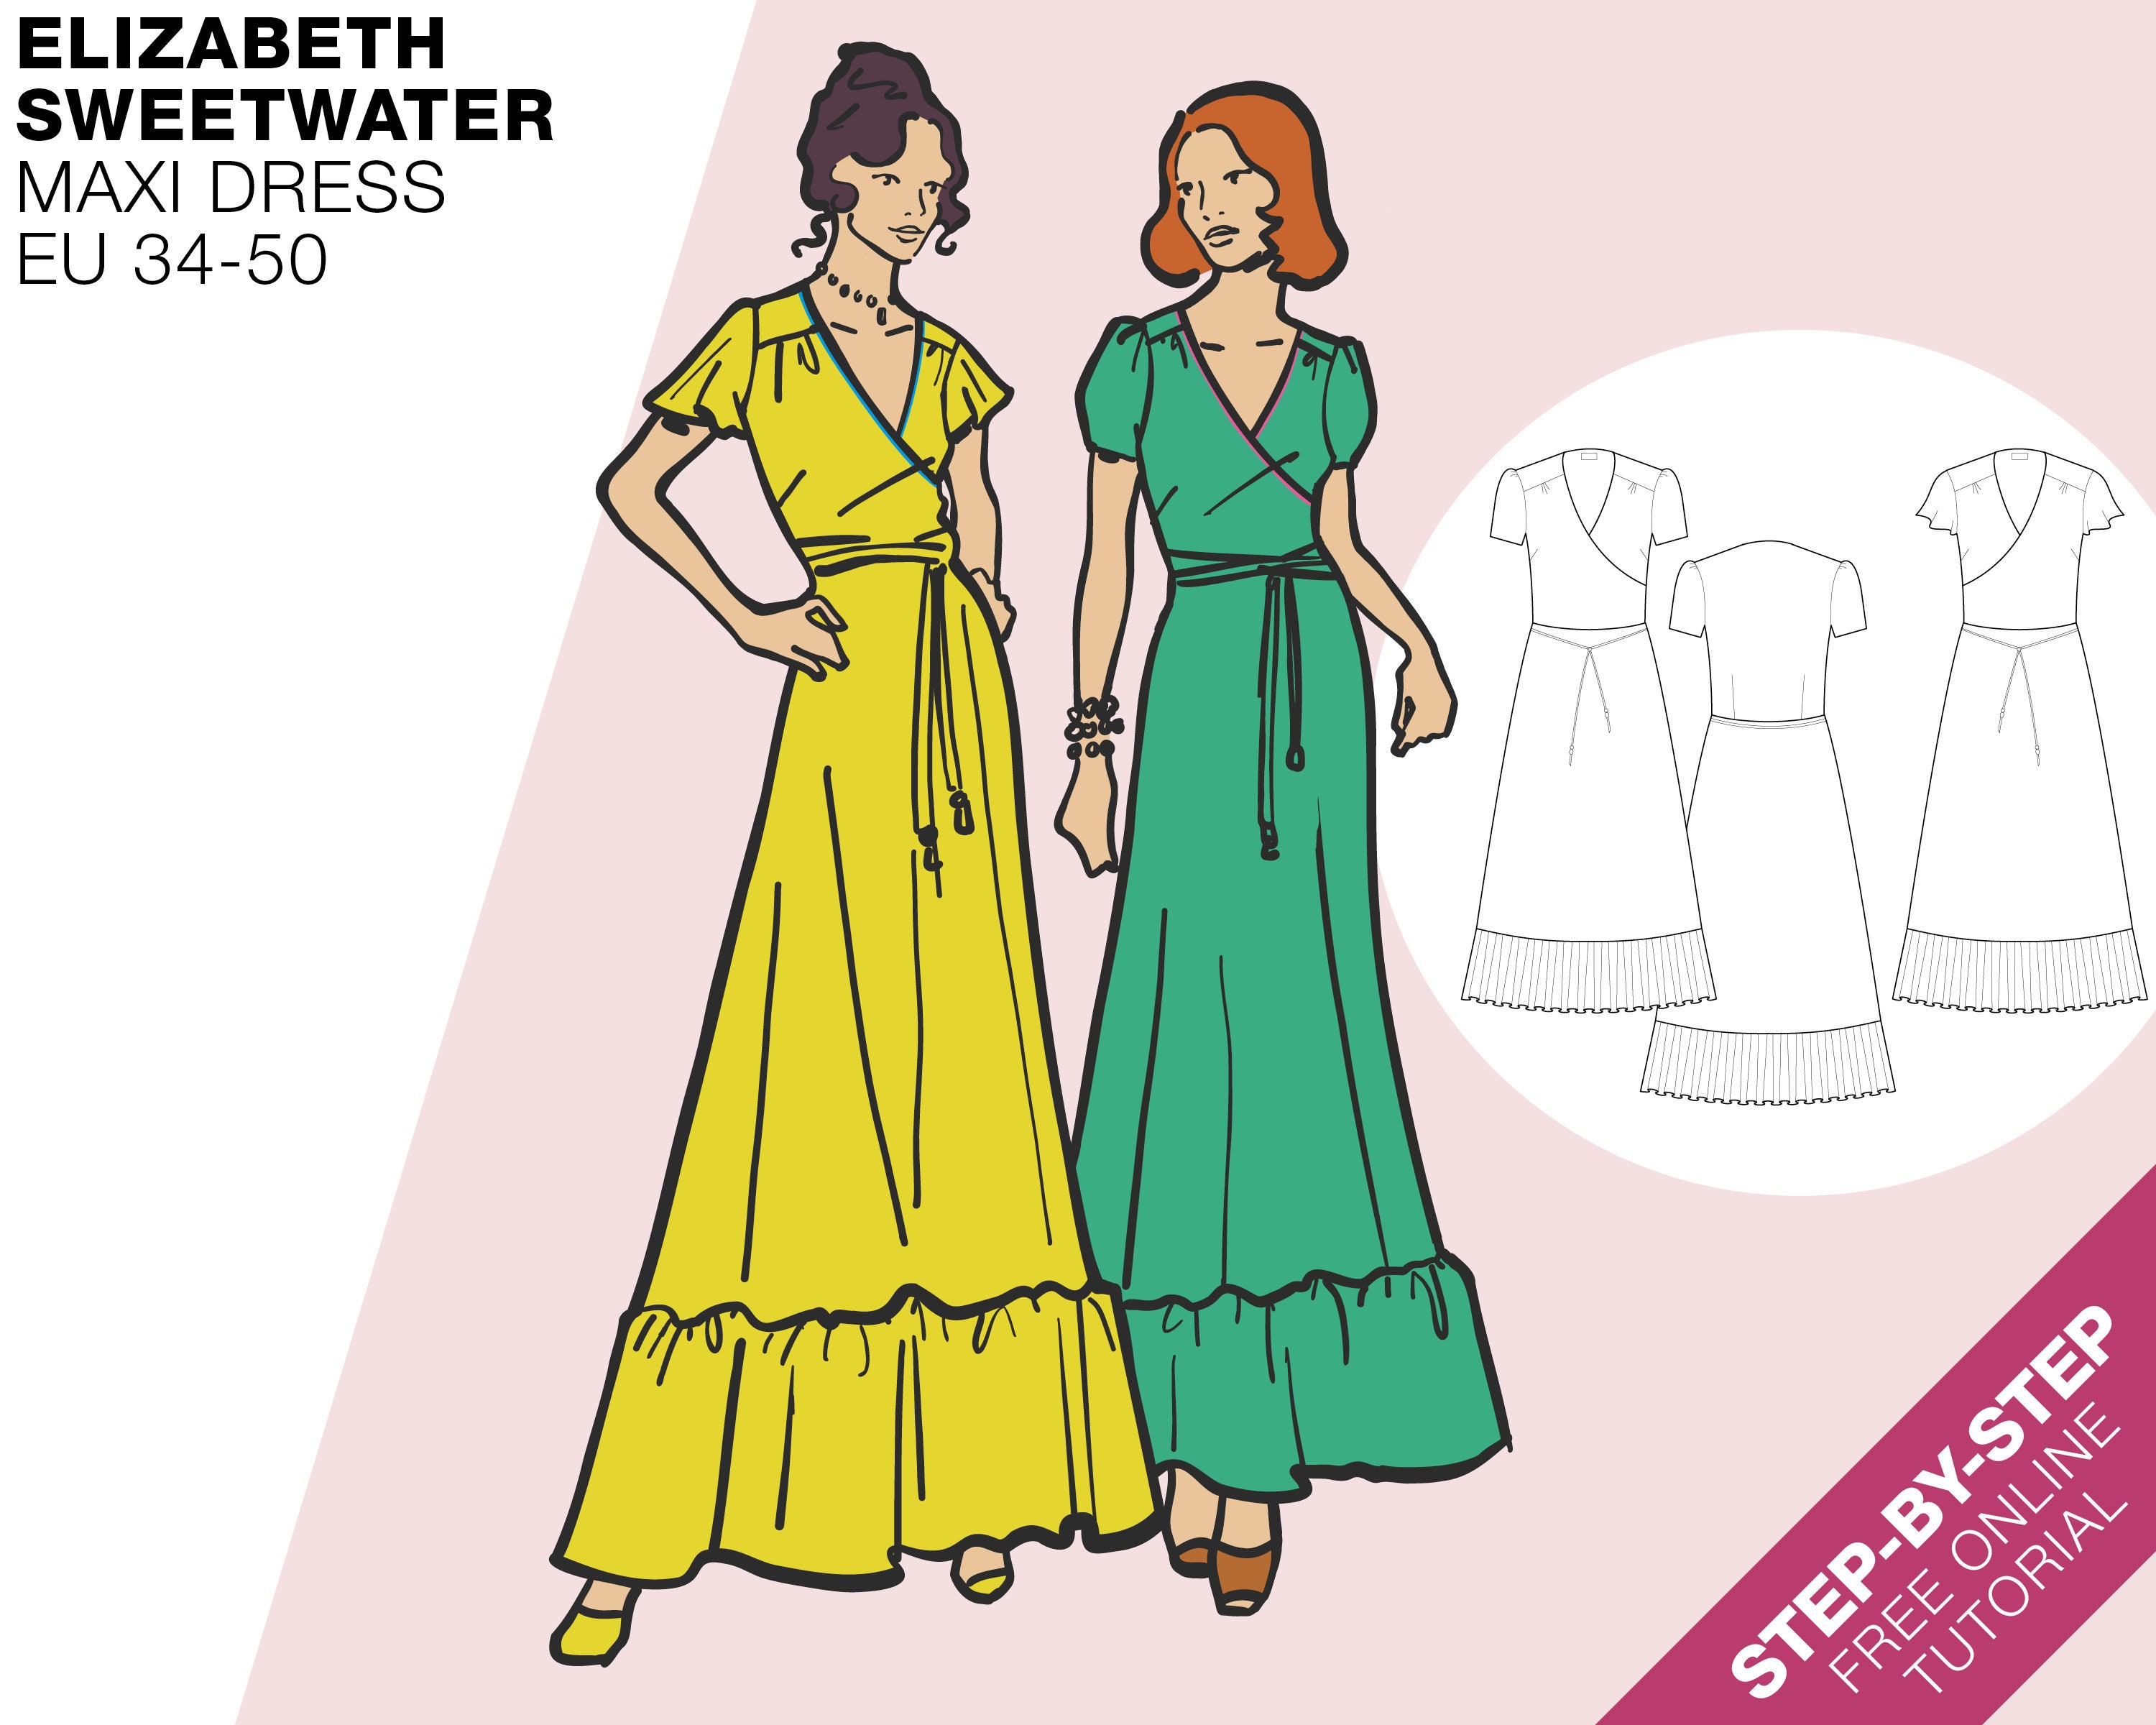 Wedding Dress Patterns - 15+ Free EPS, AI, Illustration Format Download!